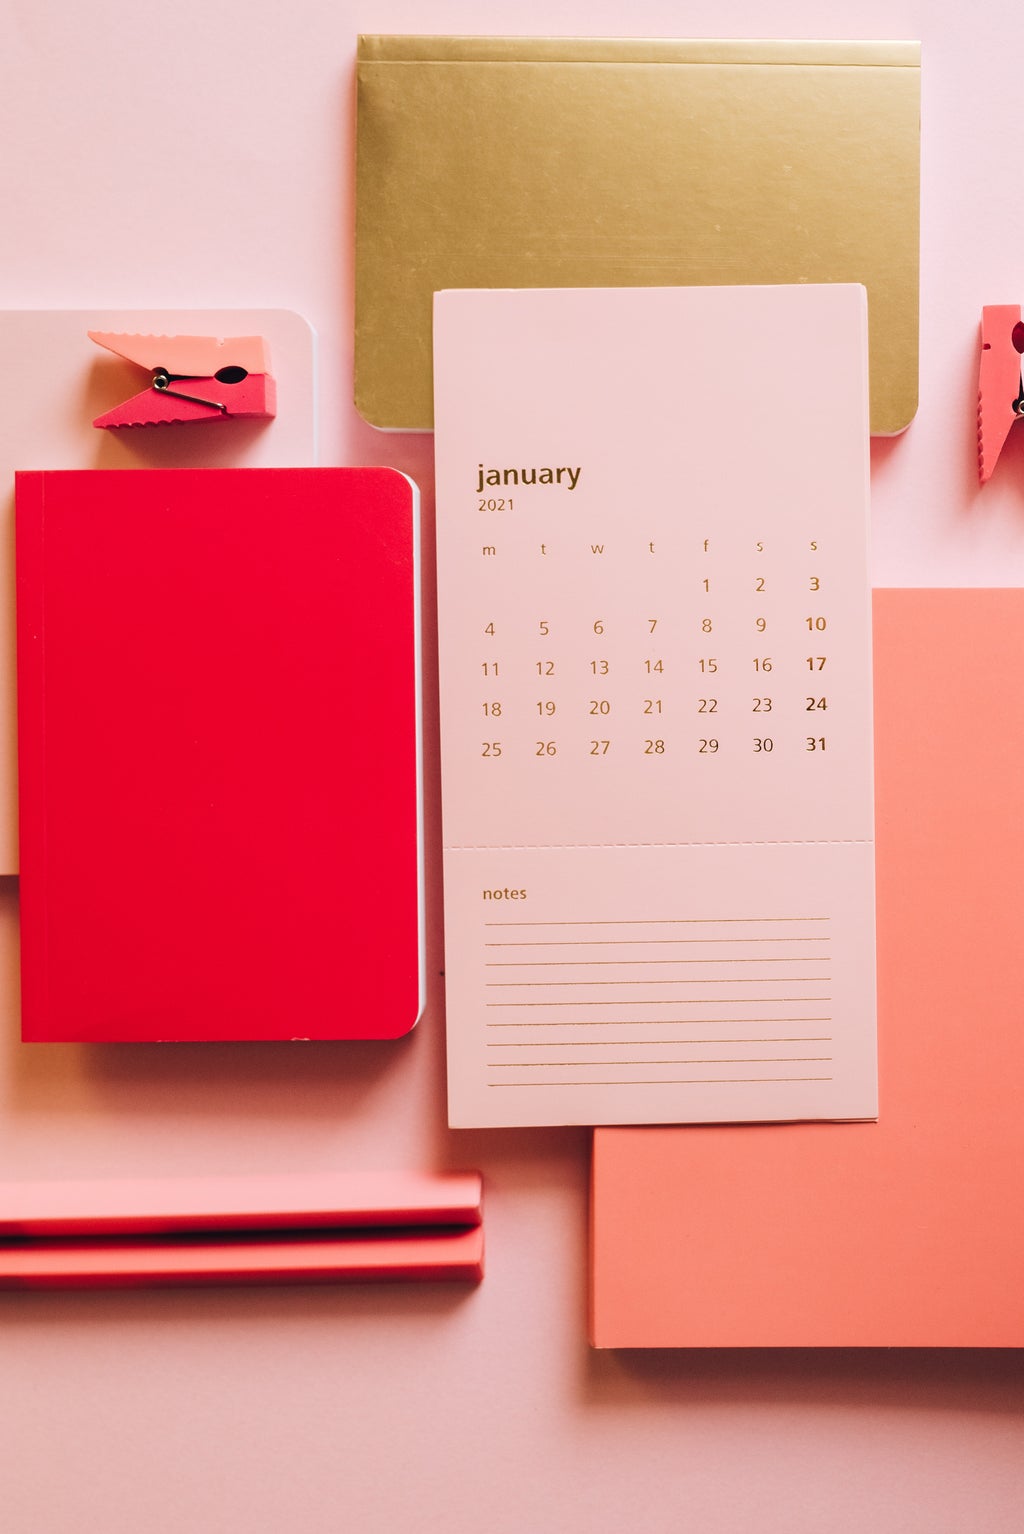 January calendar and pink stationary